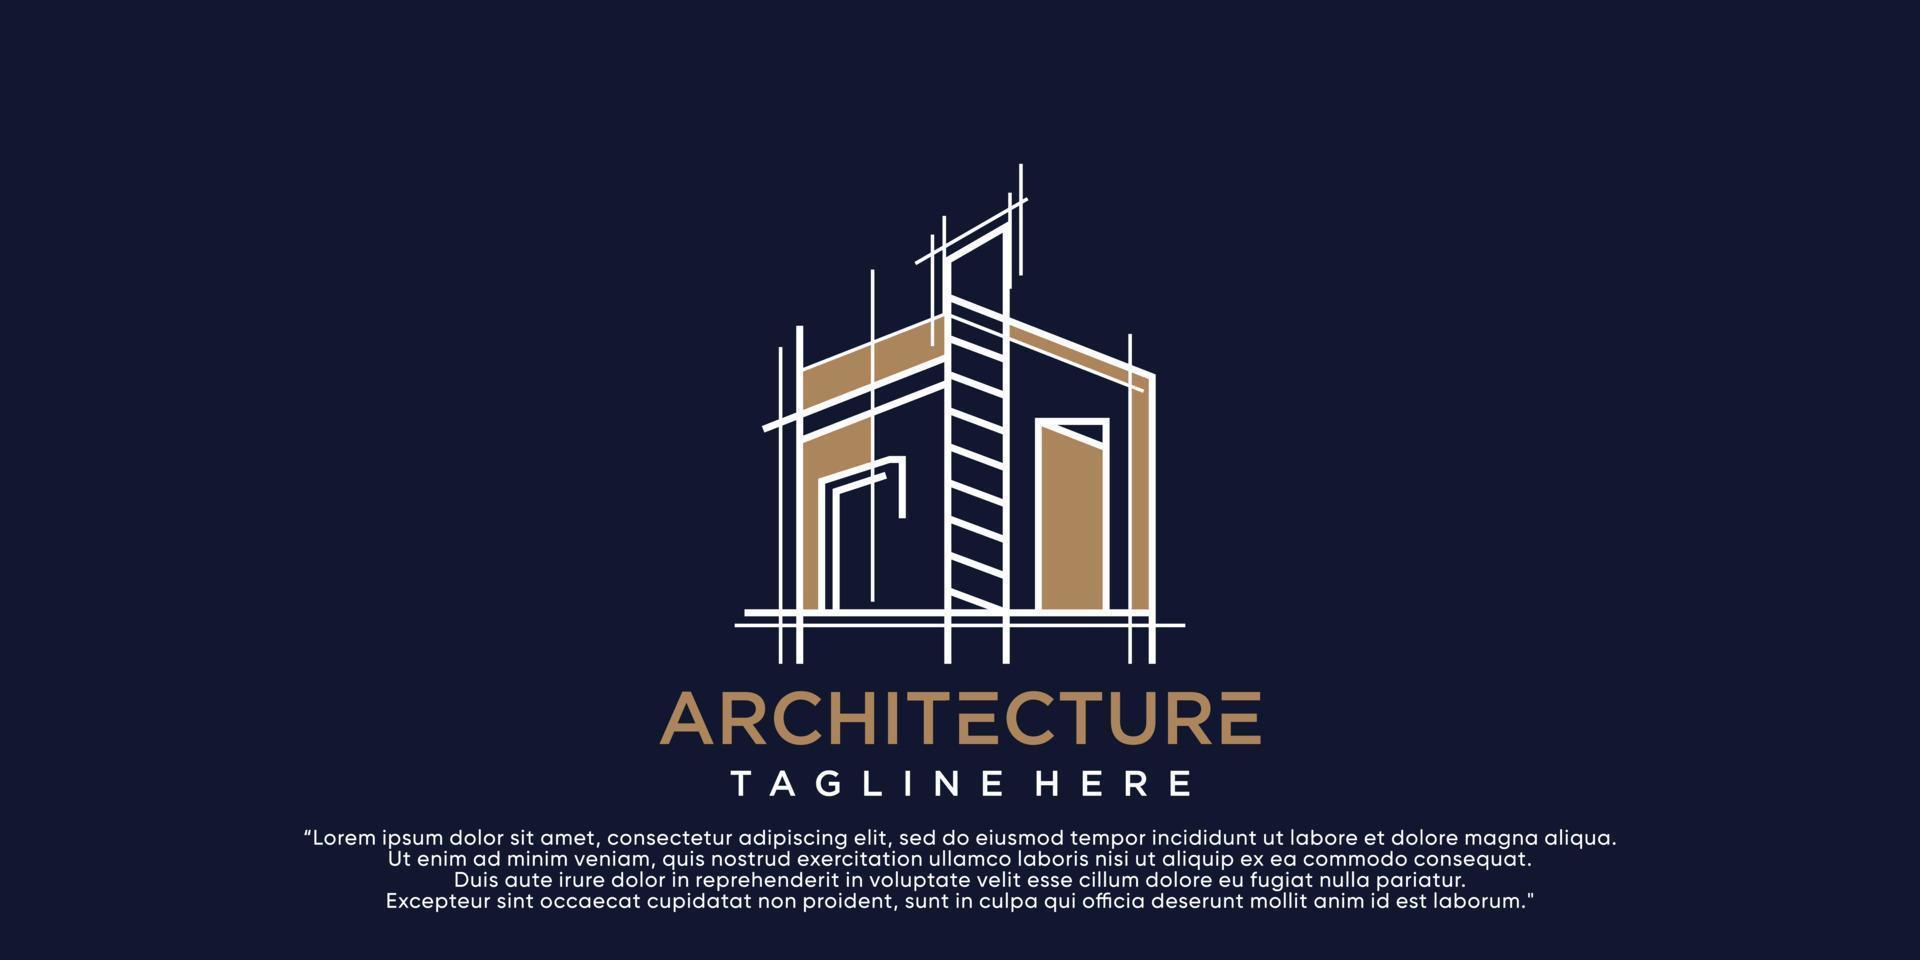 byggnad arkitektur logotyp design inspiration samling av arkitektur verklig egendom logotyp premie vektor